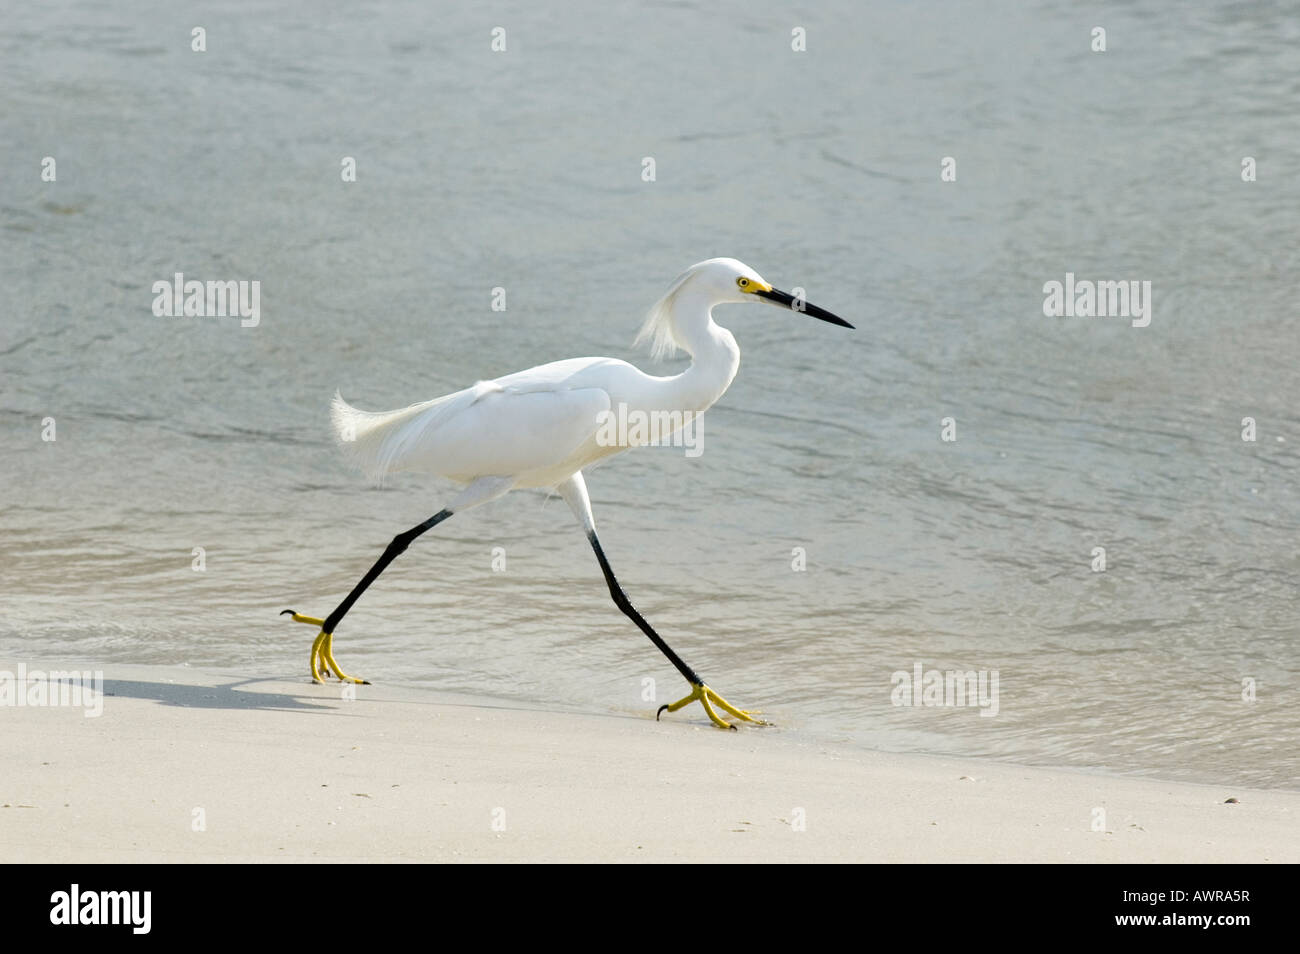 Heron walking on the beach Stock Photo